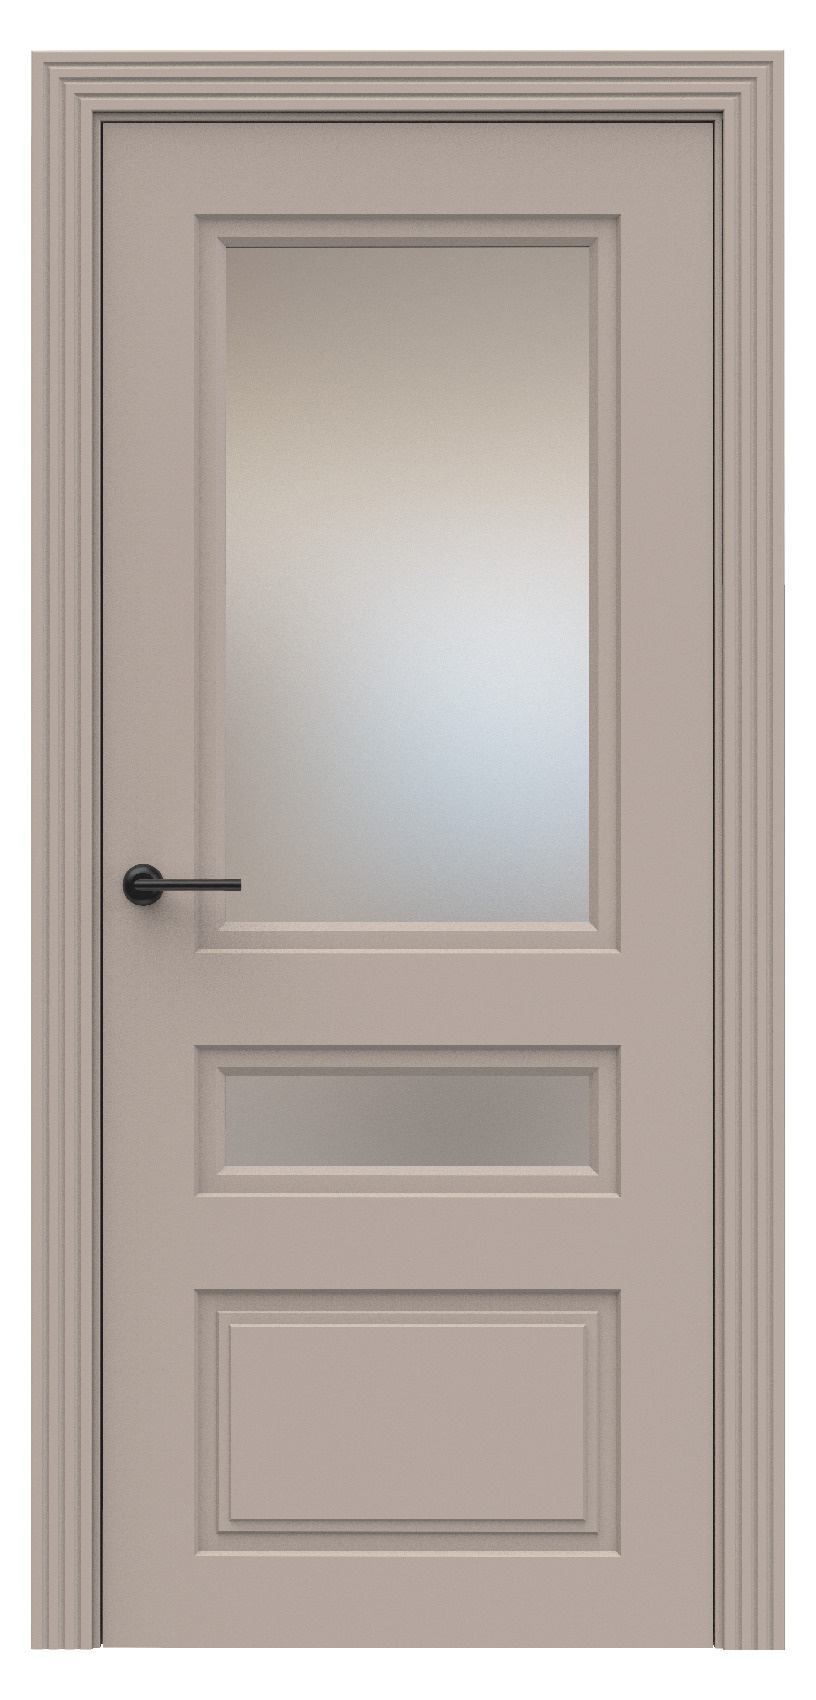 Questdoors Межкомнатная дверь QI4, арт. 17965 - фото №1